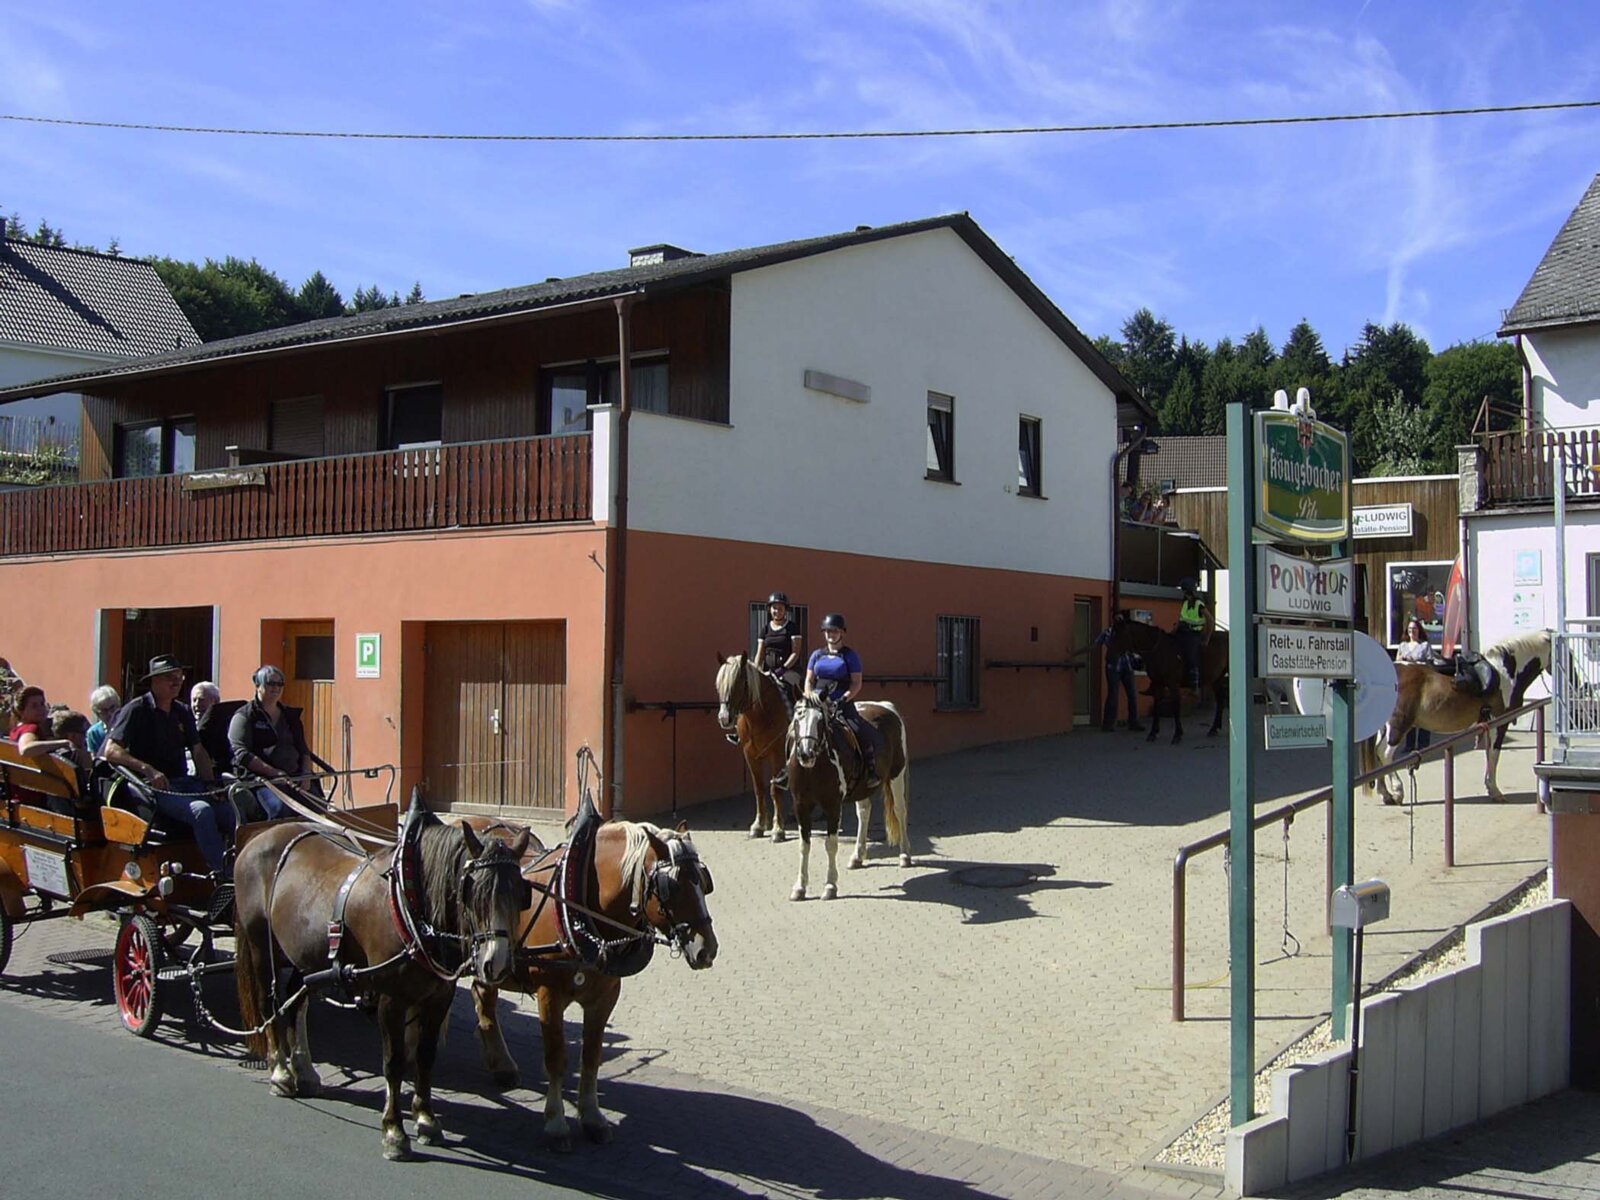 Kutschfahrt am Ponyhof Ludwig